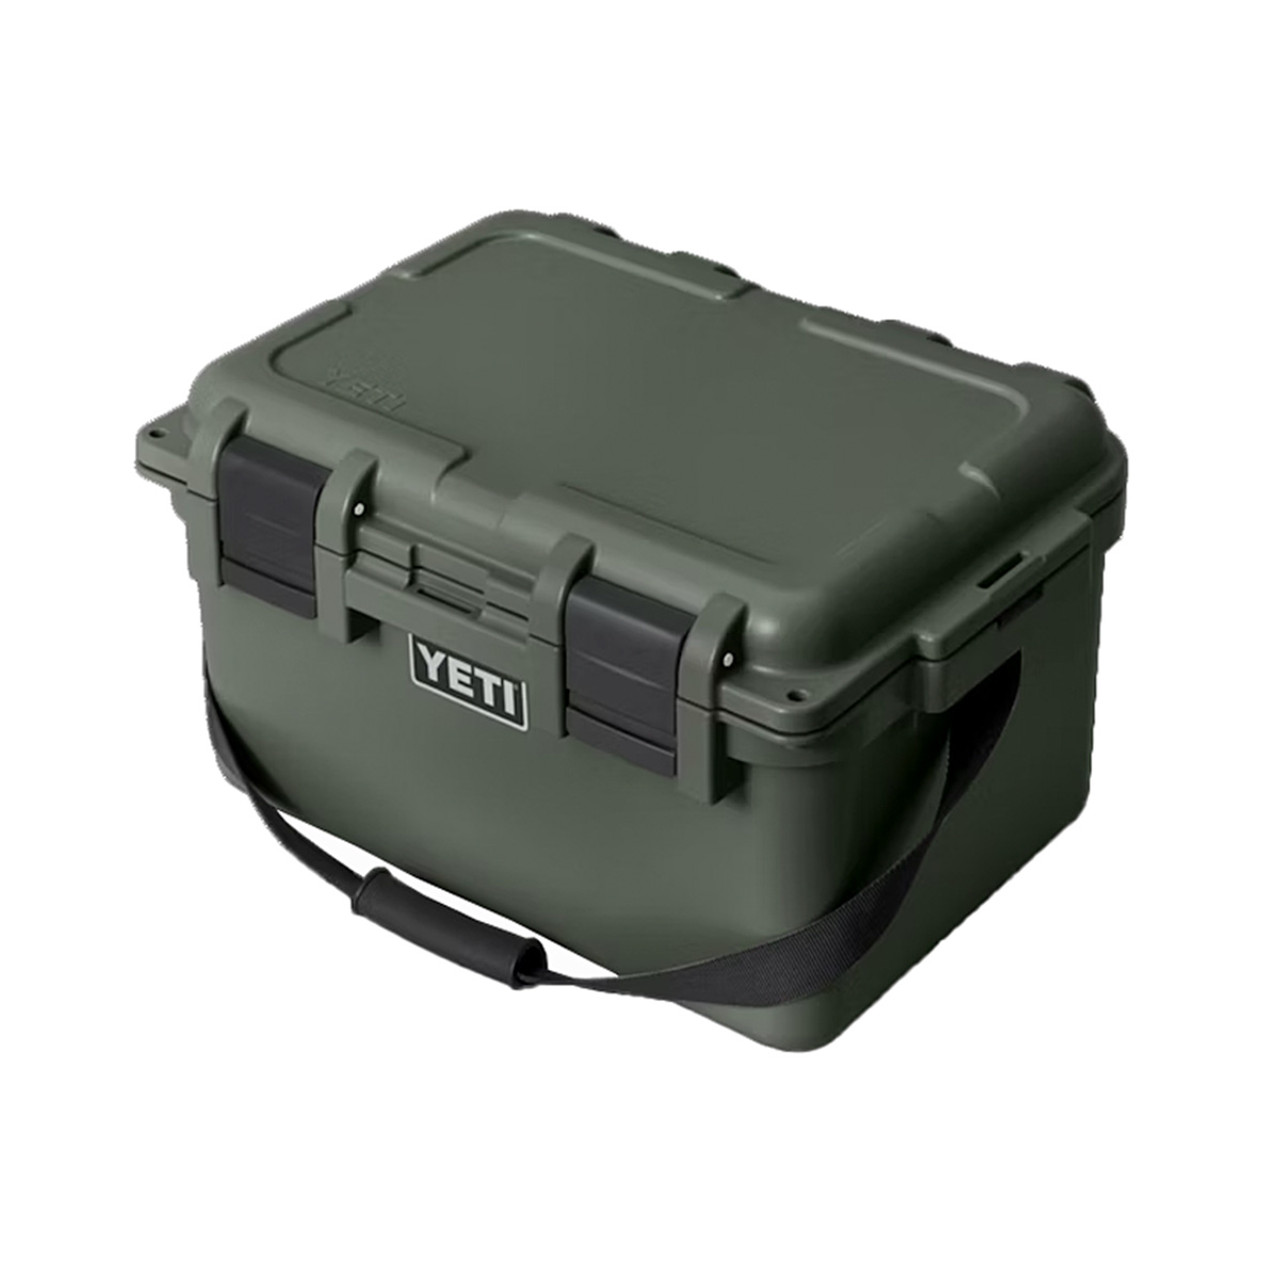 Yeti LoadOut GoBox 15 Gear Case - Camp Green